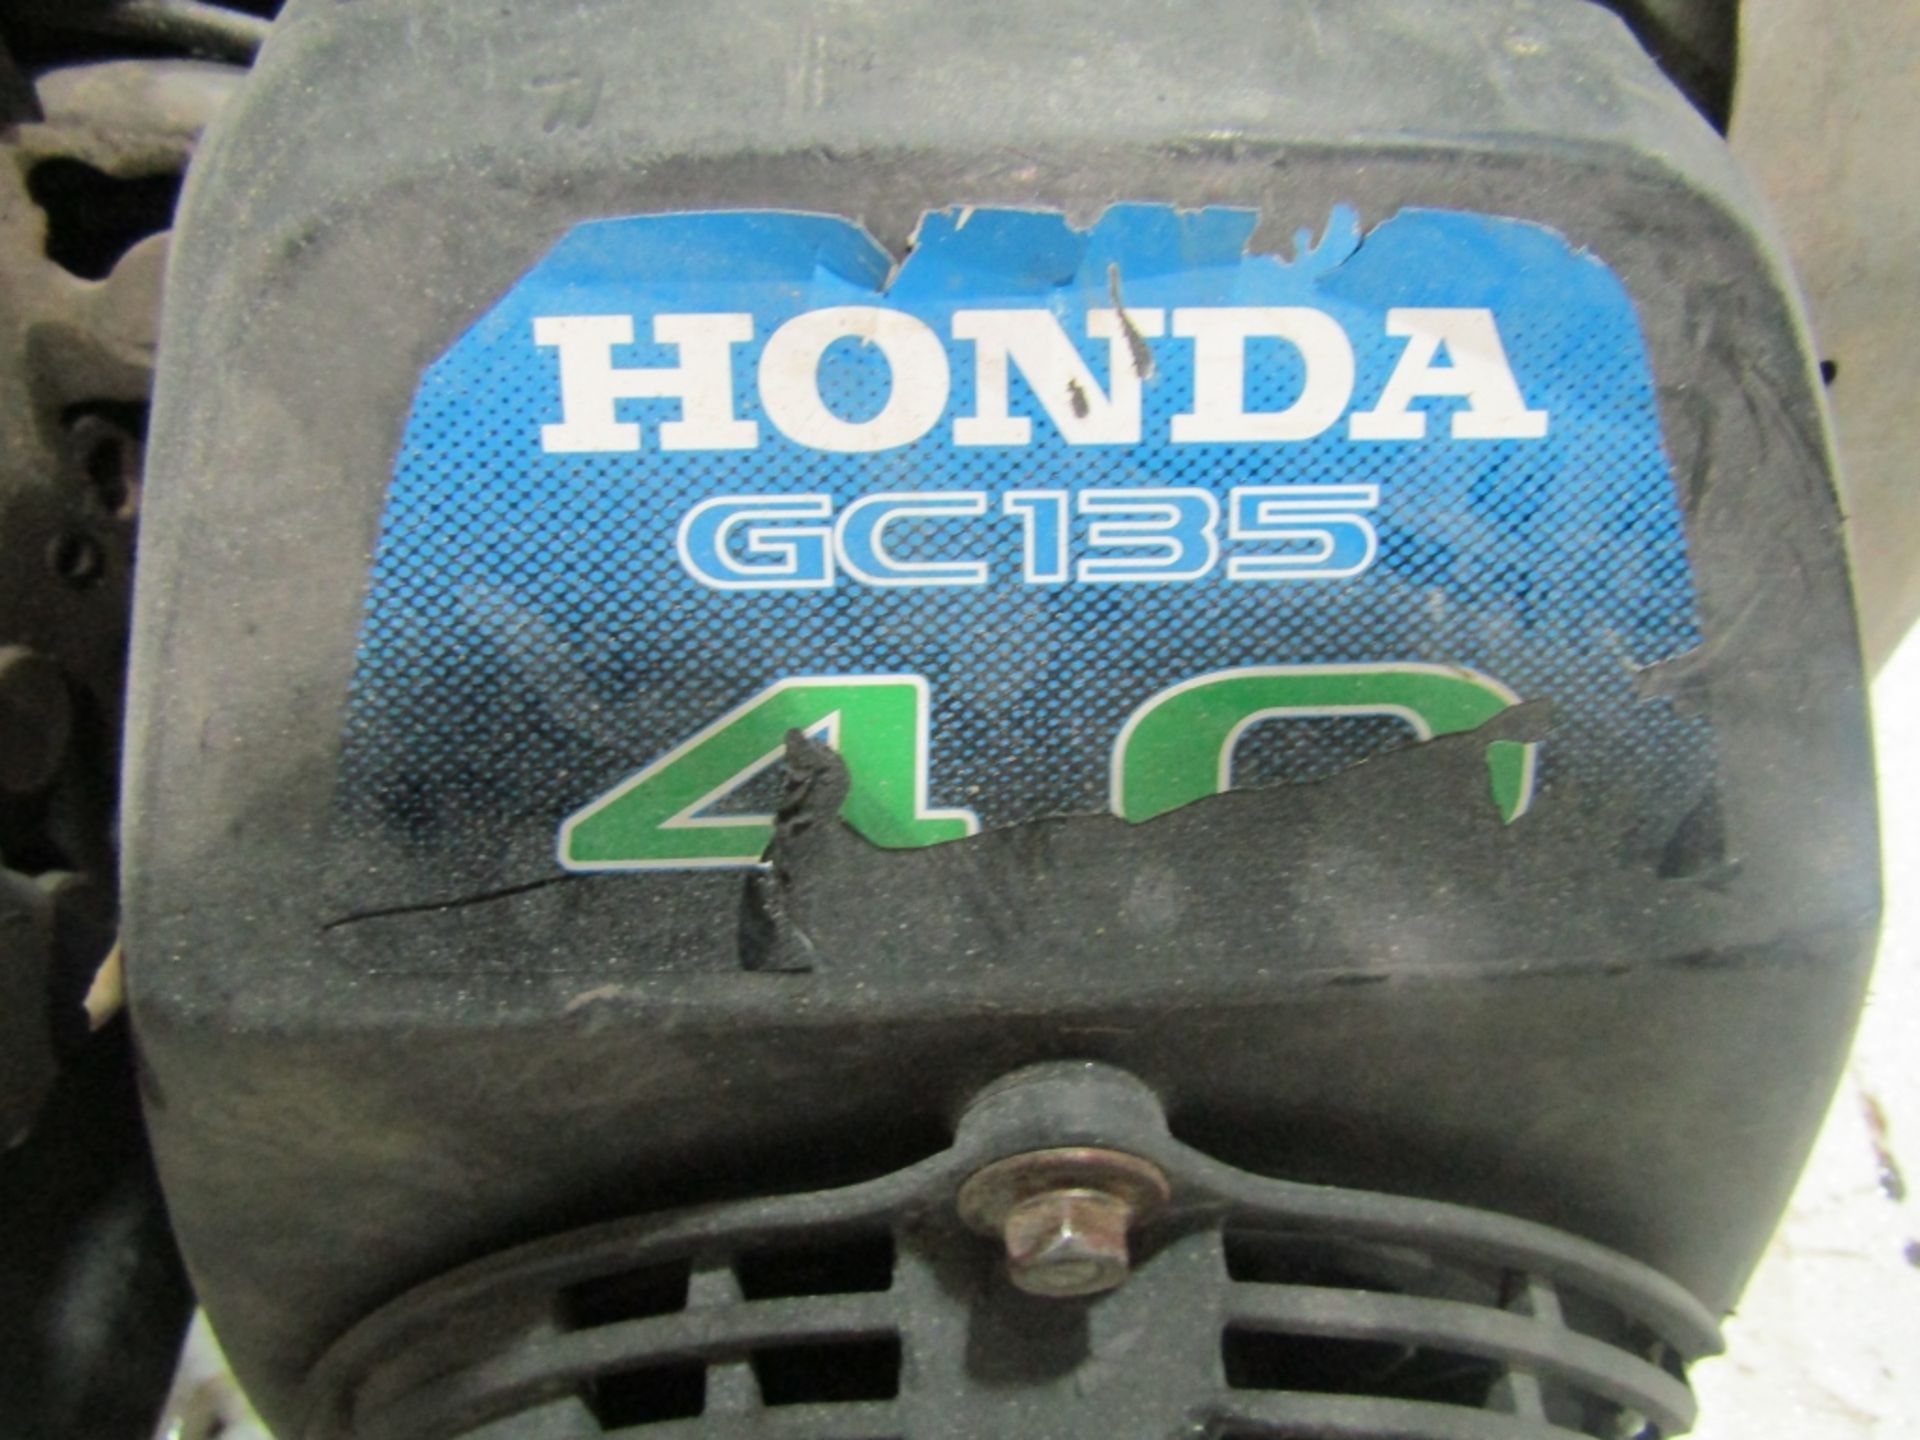 Honda GC135 4.0 HP Engine, Located in Winterset, IA - Image 2 of 3